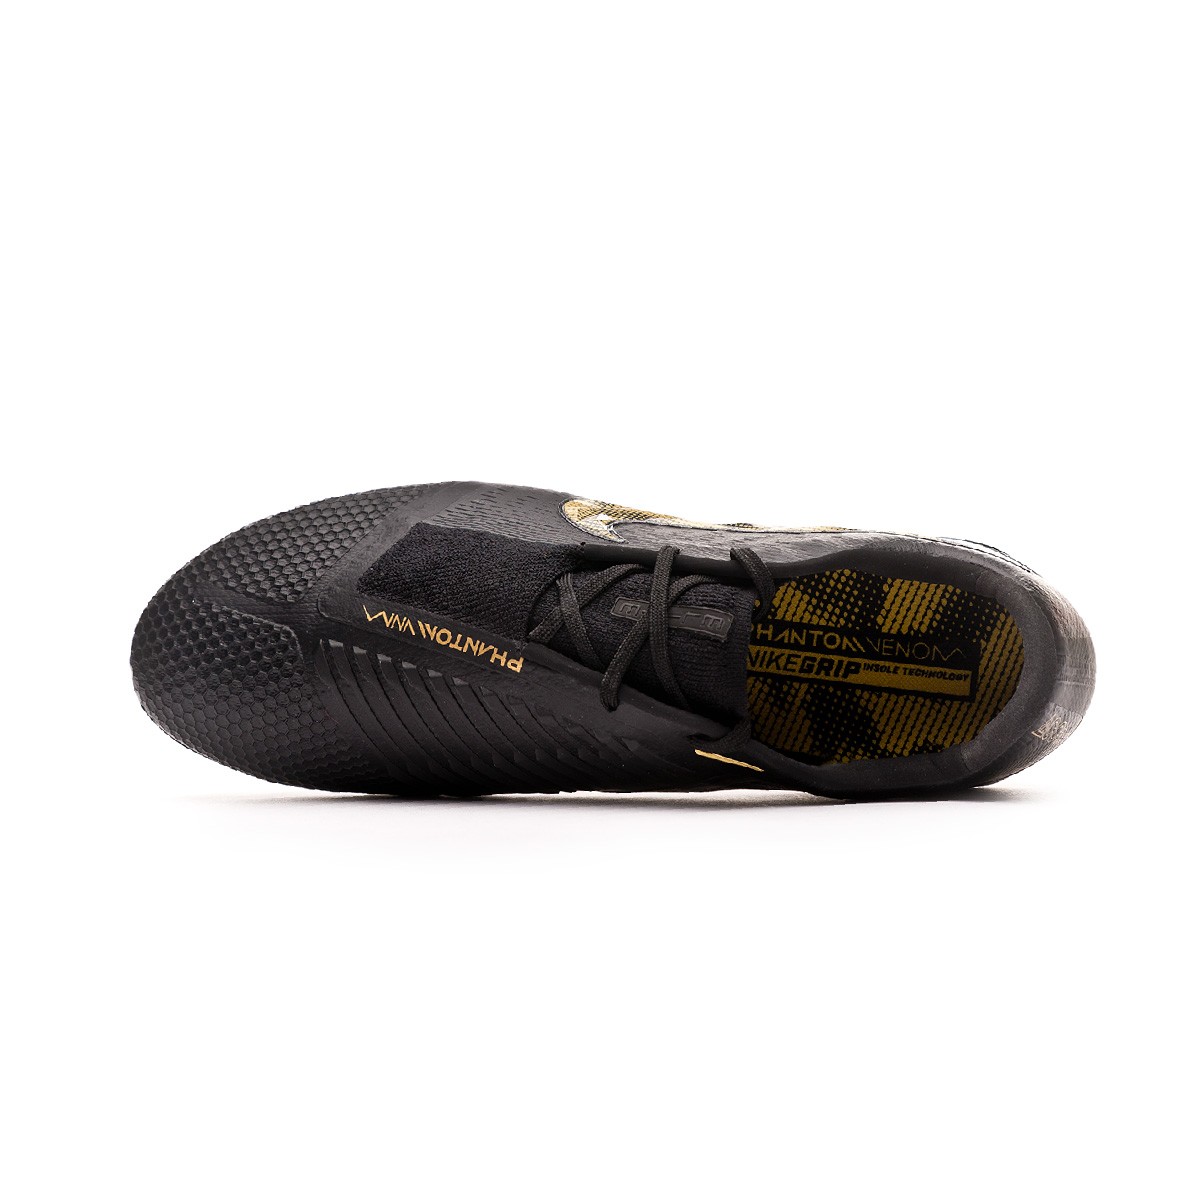 Nike Men's Hypervenom Phade III Indoor Soccer Shoes